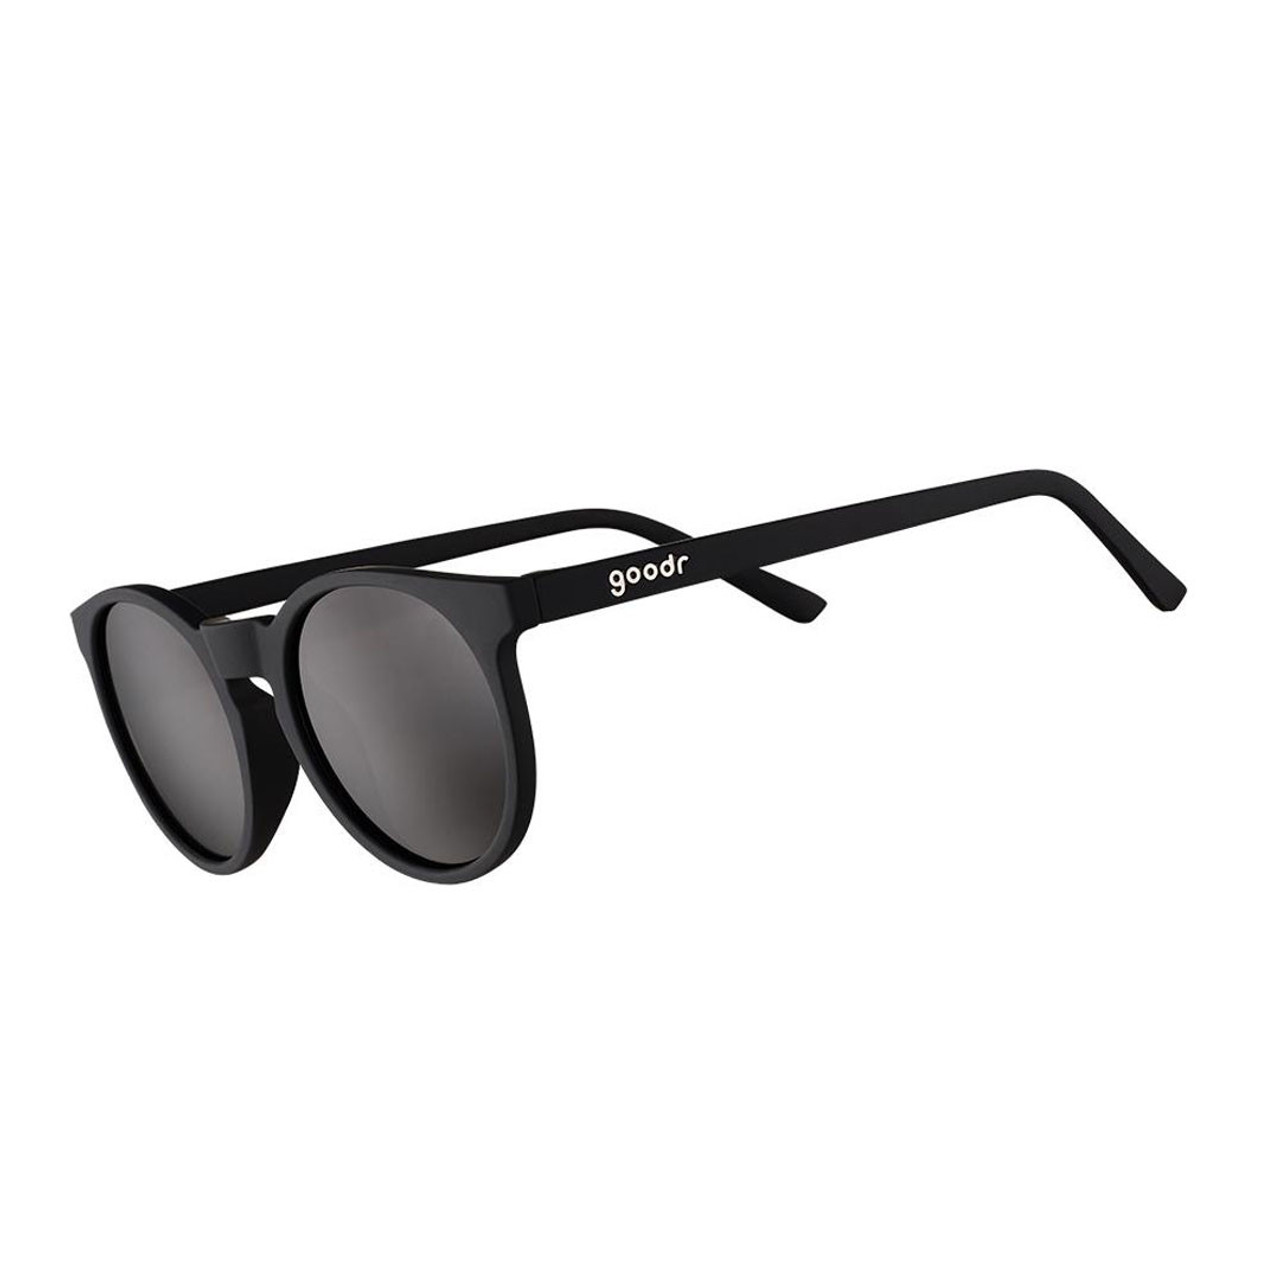 Vazrobe 150mm Oversized Sunglasses Men Polarized Sun Glasses for Male  Driving TR90 Ultralight Driver Big Face Large Black